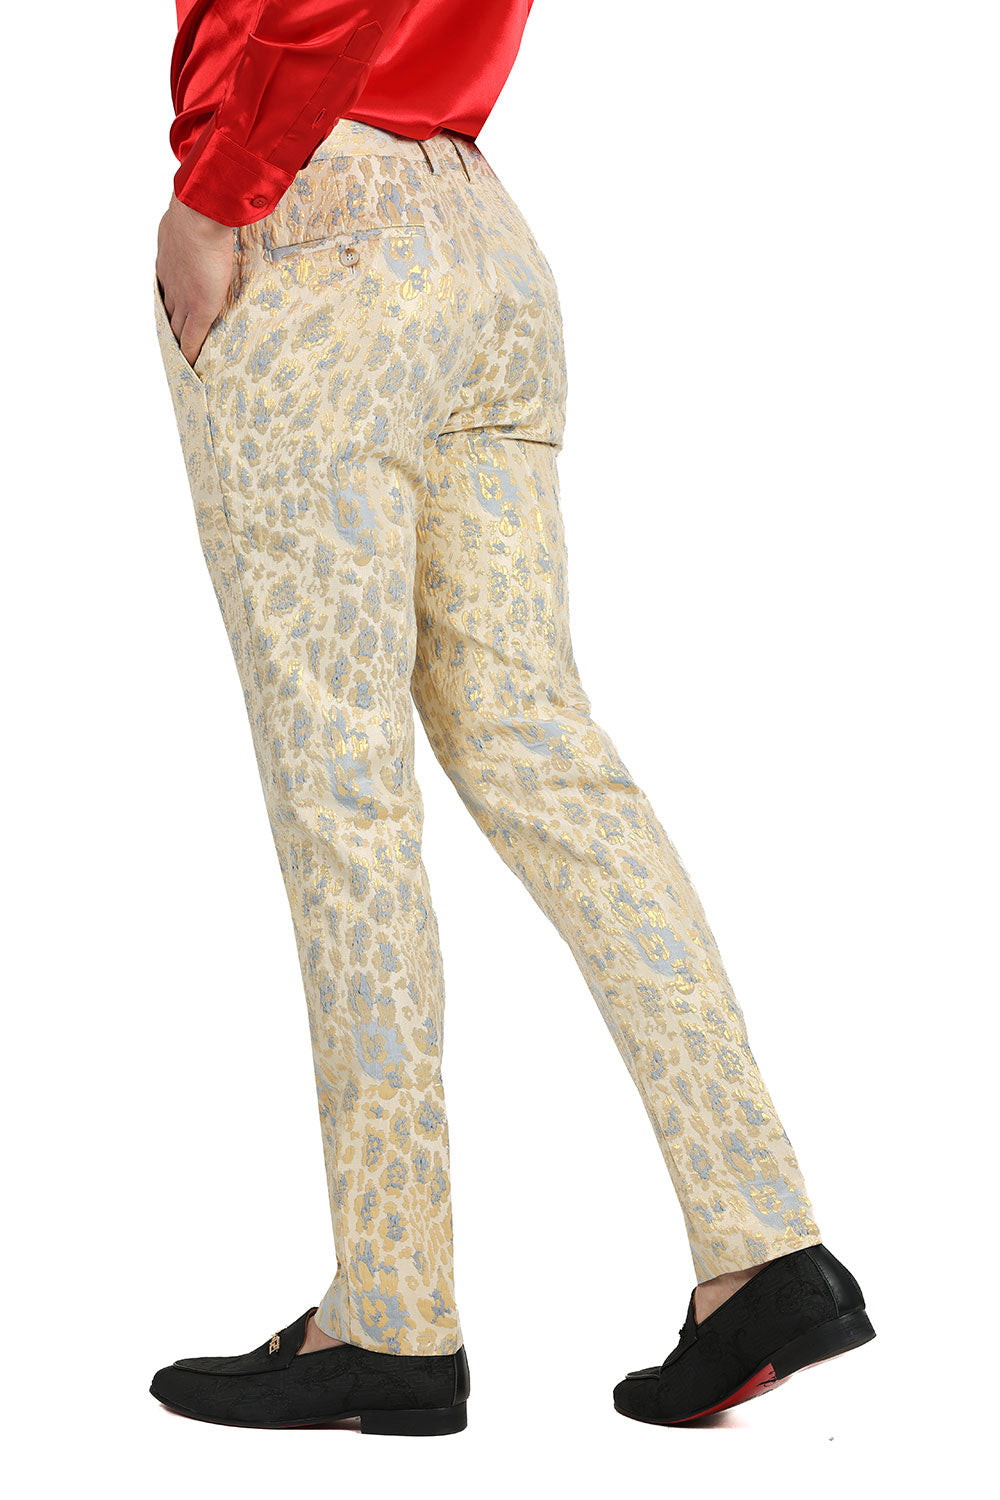 BARABAS Men's High Fashion Decorative Dress Pants 3CP01 Gold